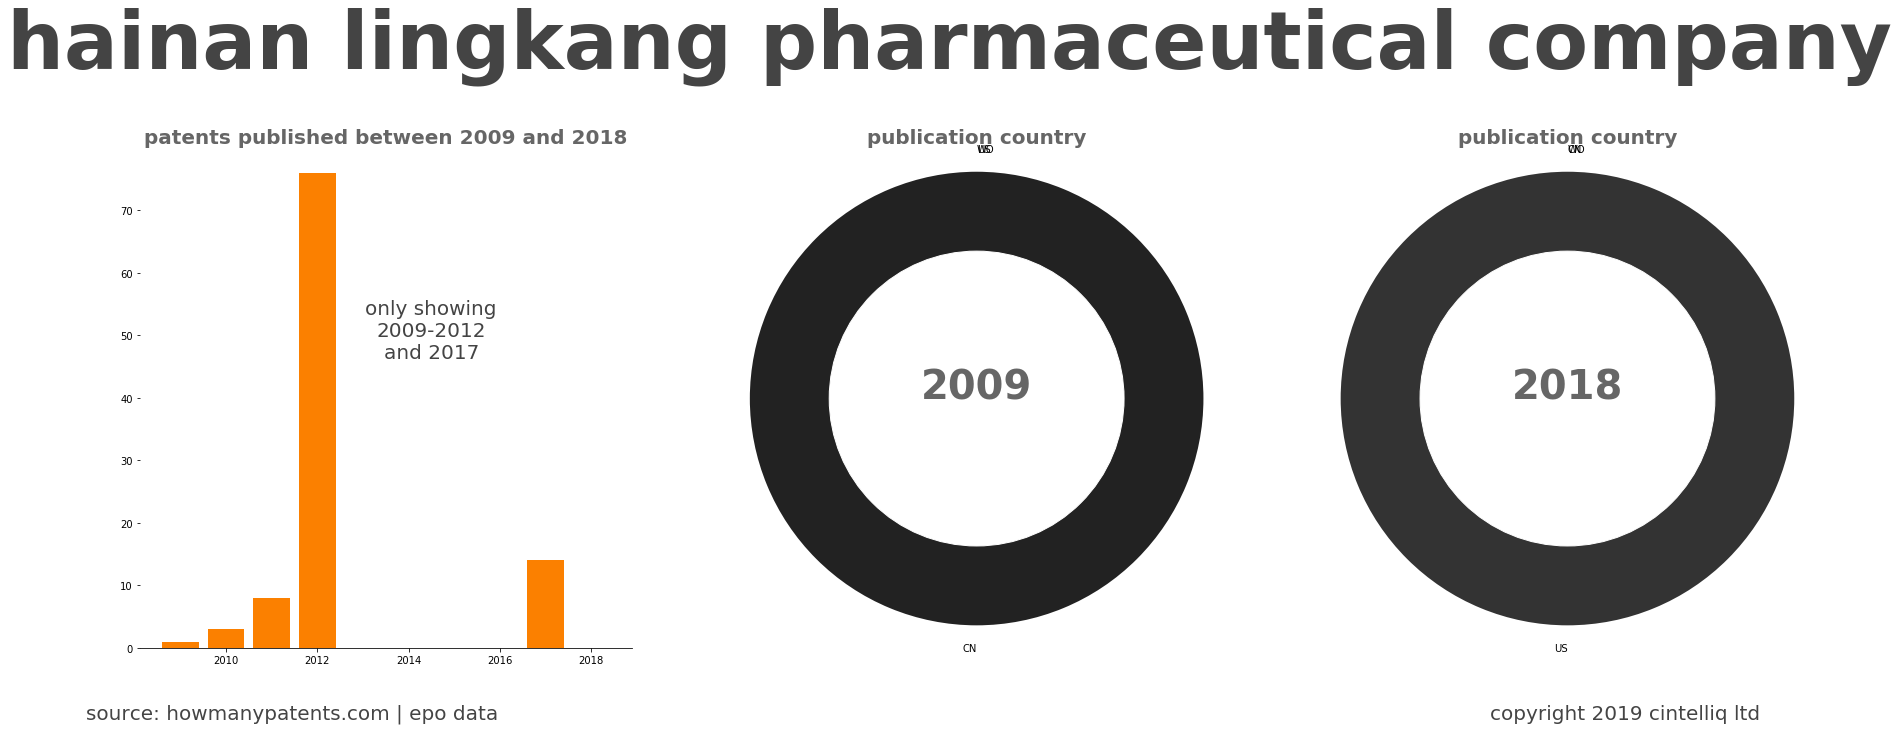 summary of patents for Hainan Lingkang Pharmaceutical Company